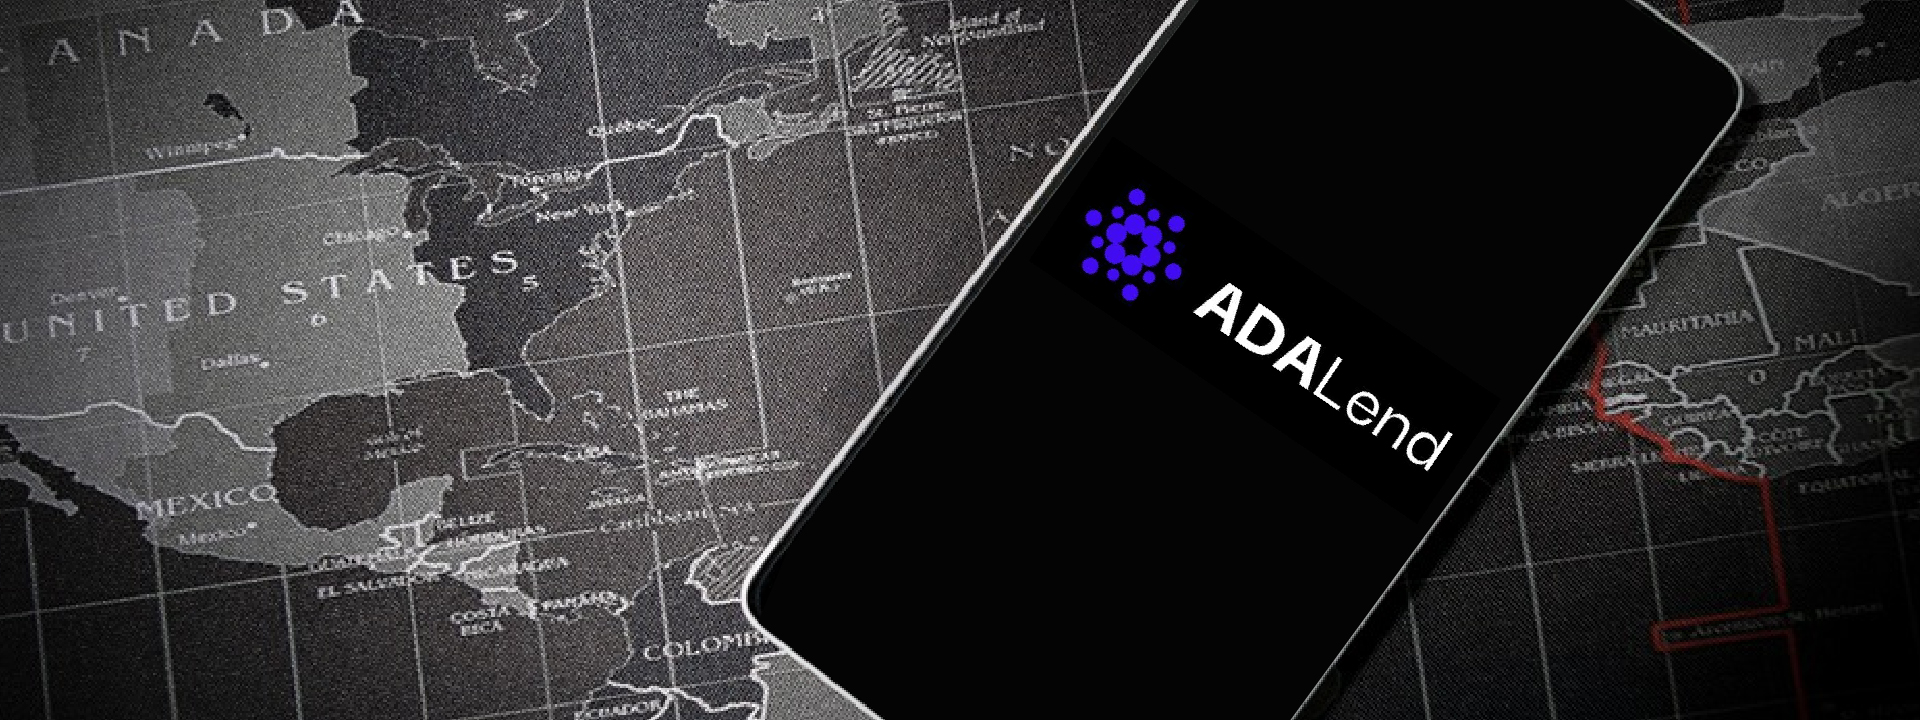 ADALend: A Promising DeFi Lending Platform by Cardano